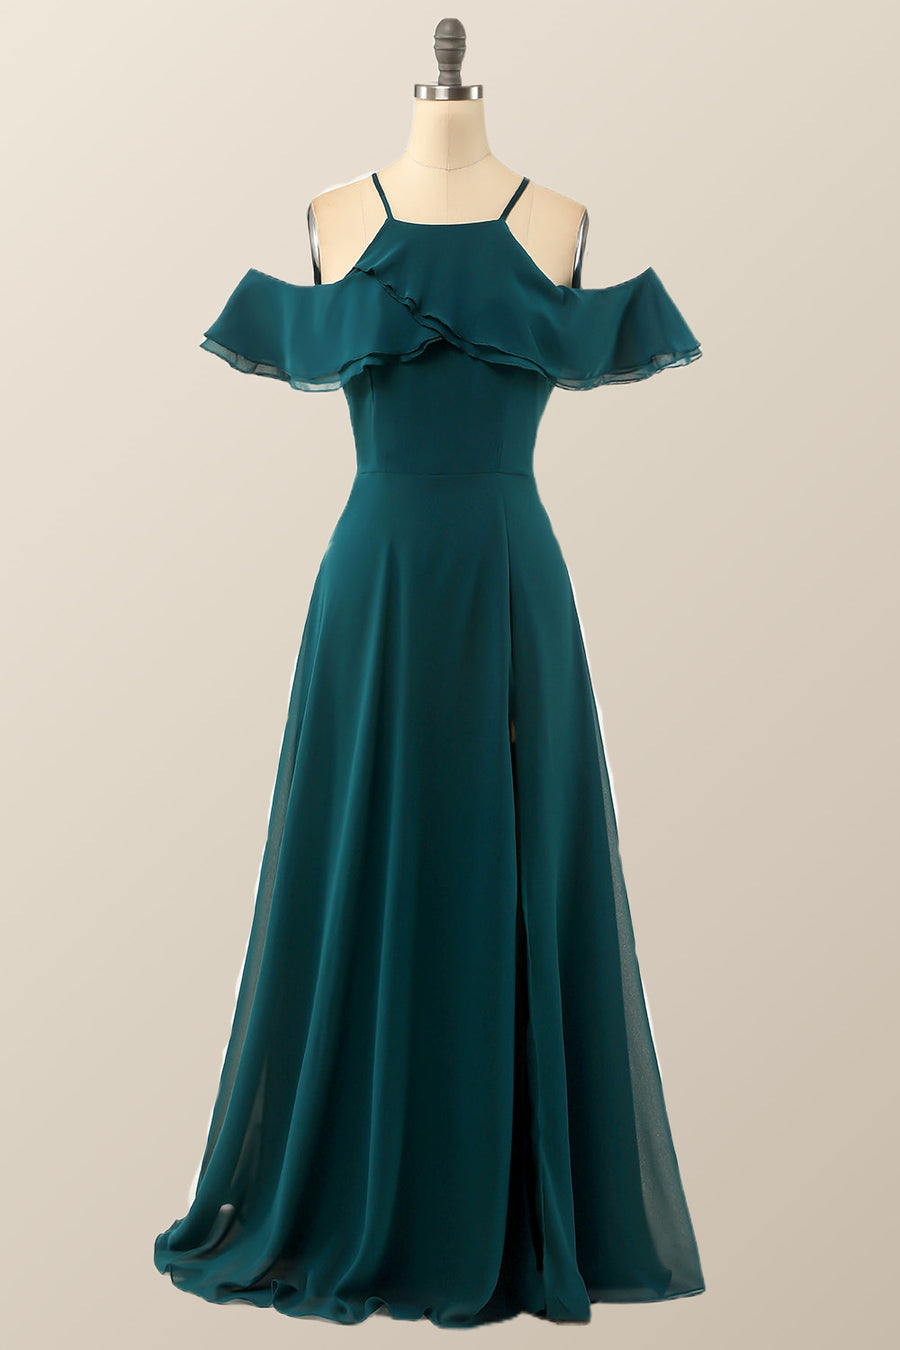 Turquoise Green Chiffon A-line Long Simple Dress